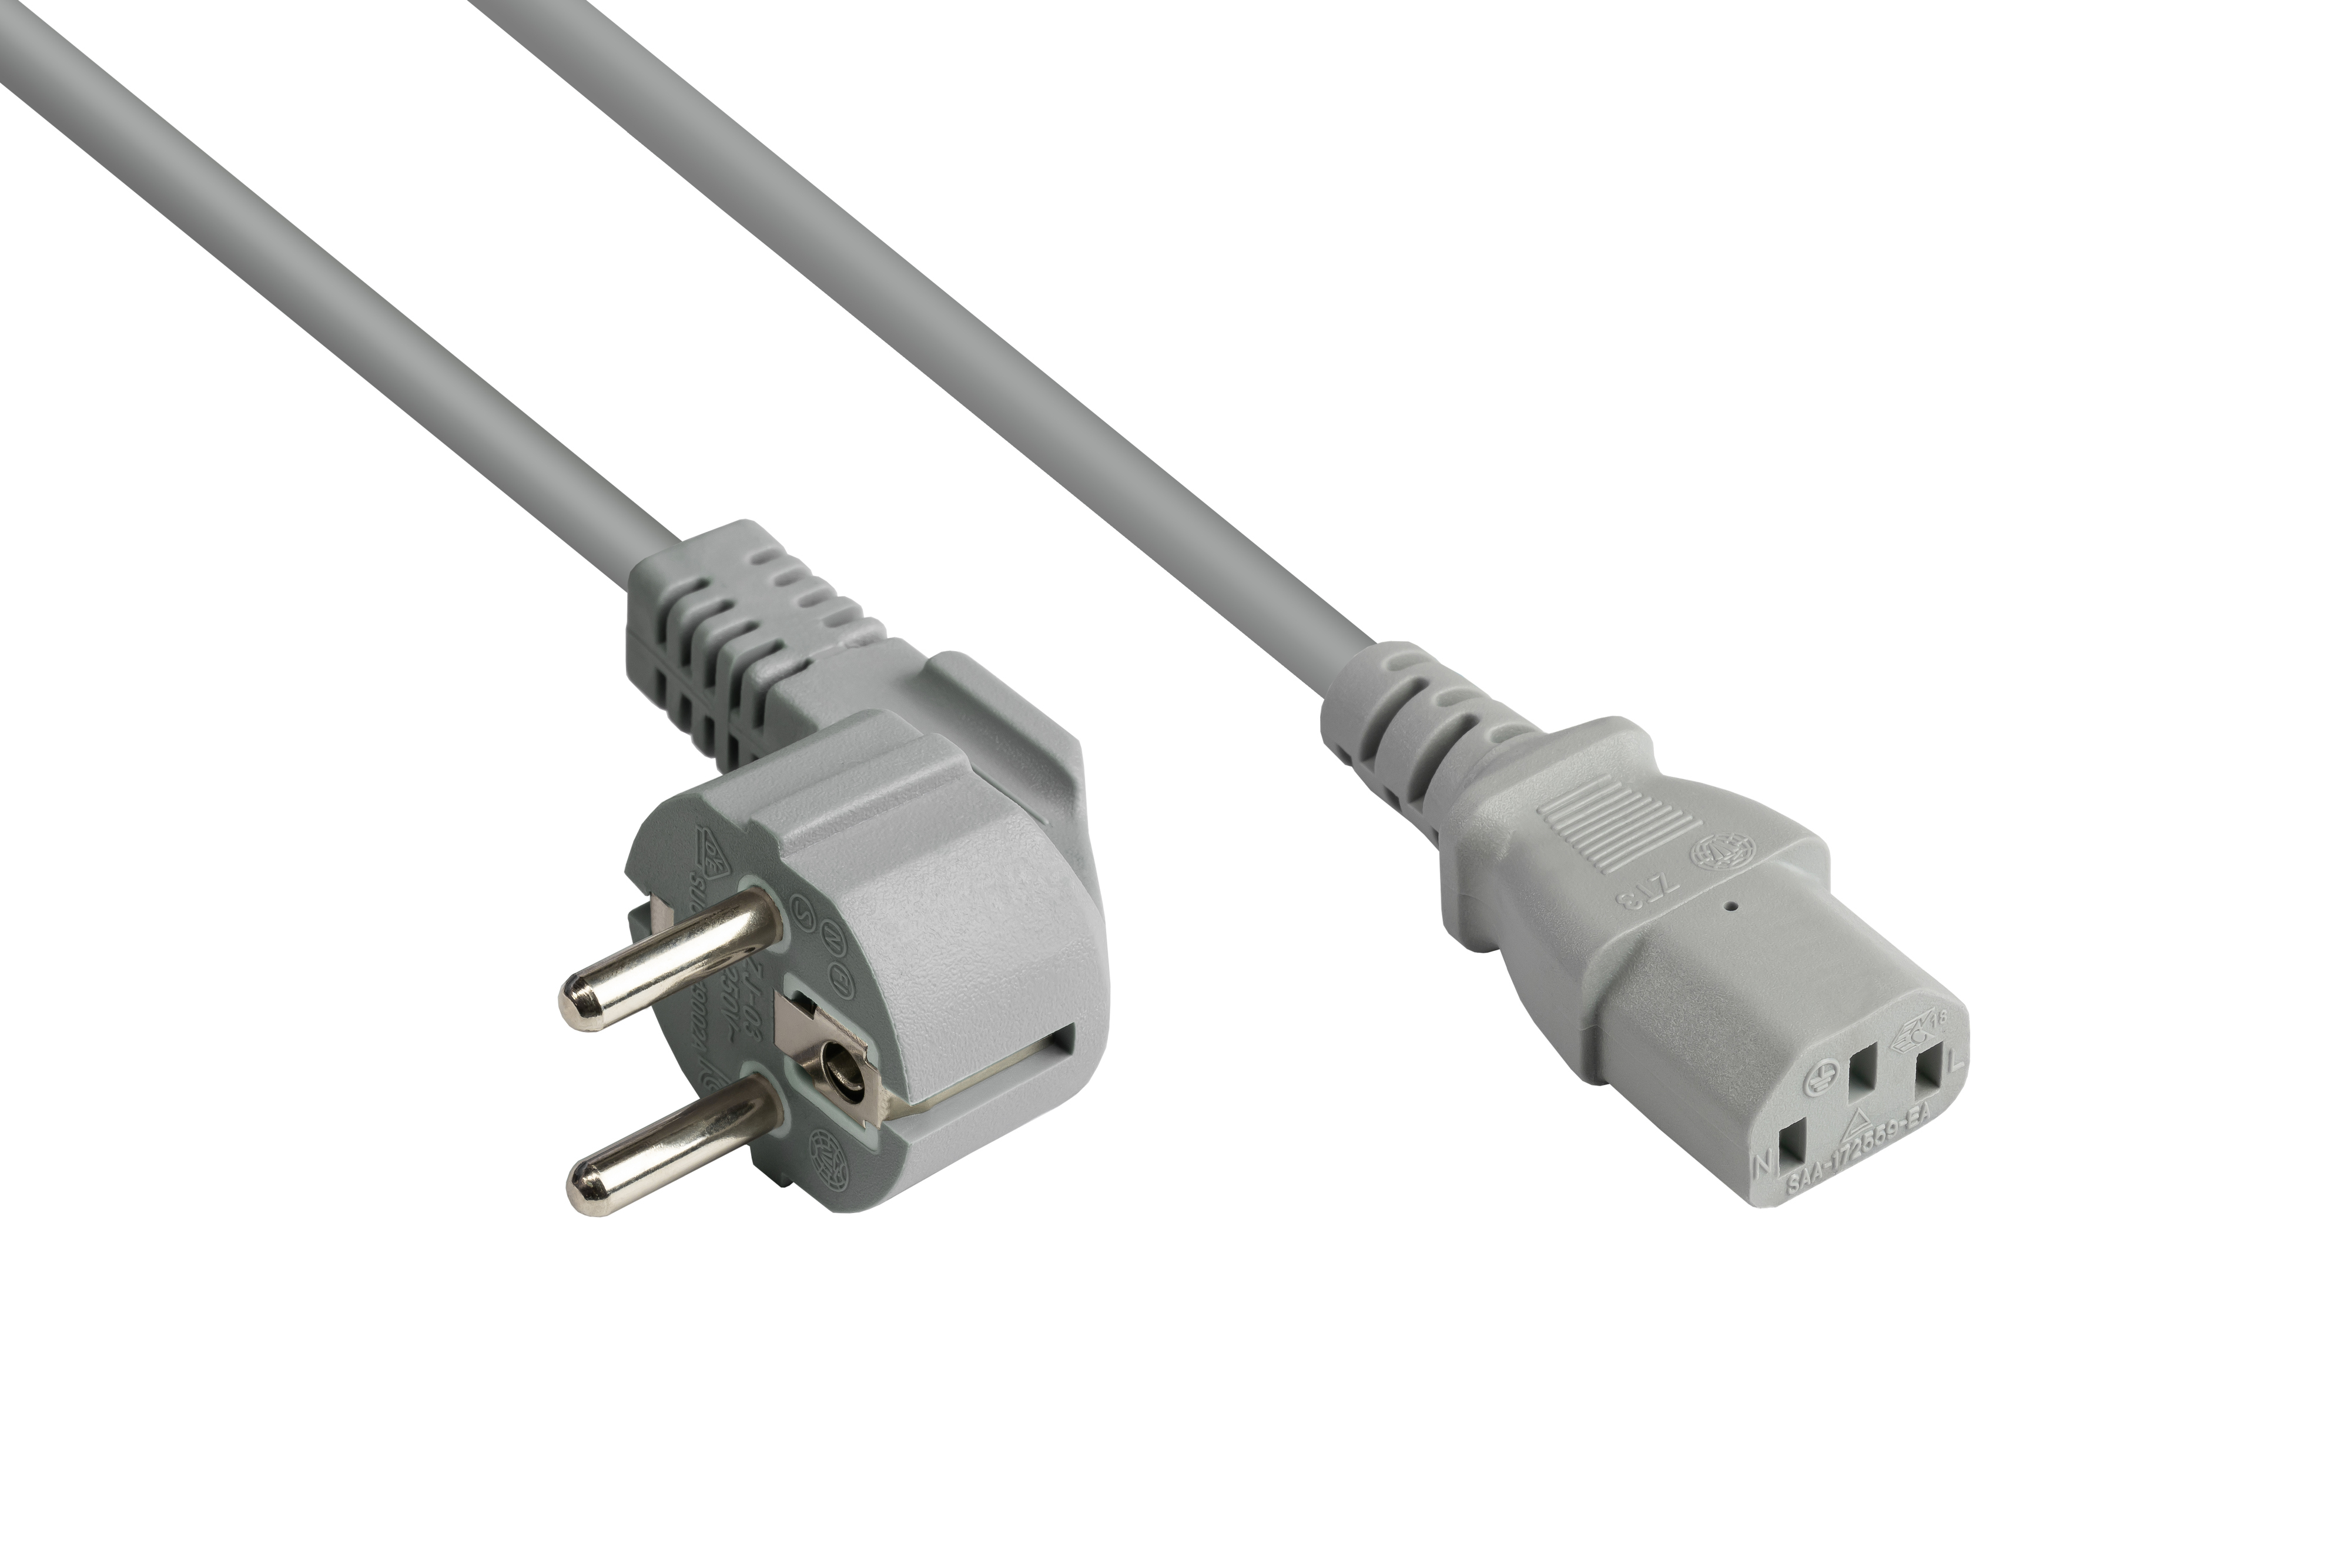 CONNECTIONS Schutzkontakt-Stecker E+F (gerade), Typ an C13 gewinkelt) Stromkabel, 7/7, GOOD mm² grau, grau 0,75 (CEE